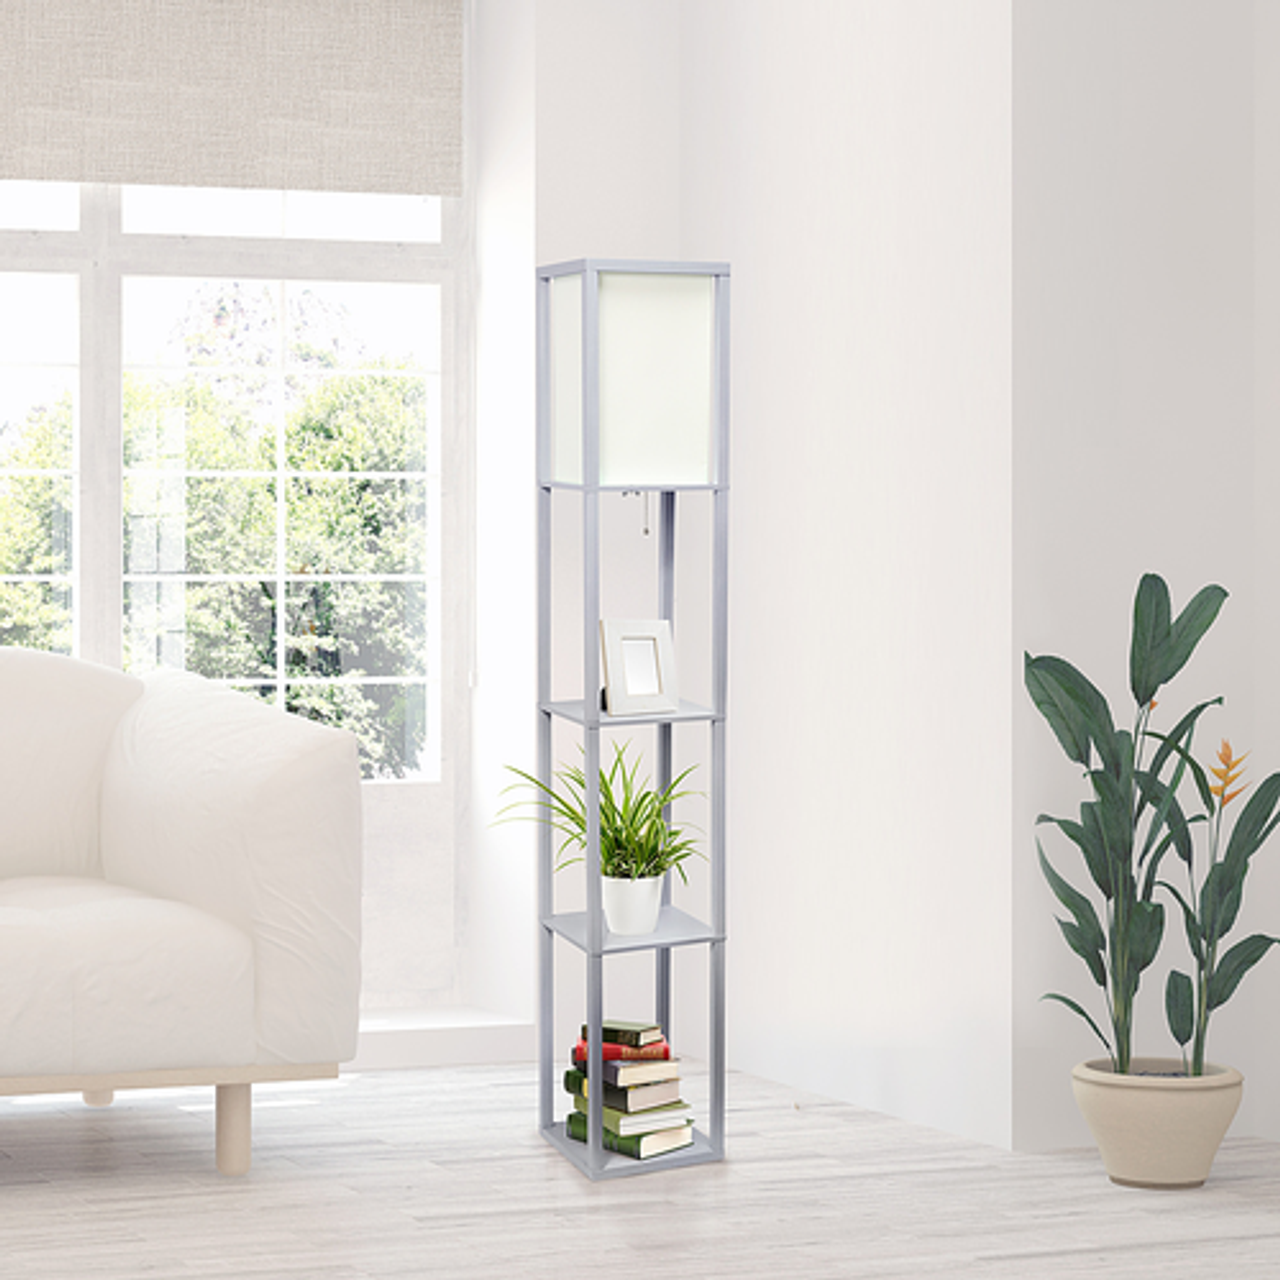 Lalia Home Column Shelf Floor Lamp with Linen Shade, Gray - GRAY